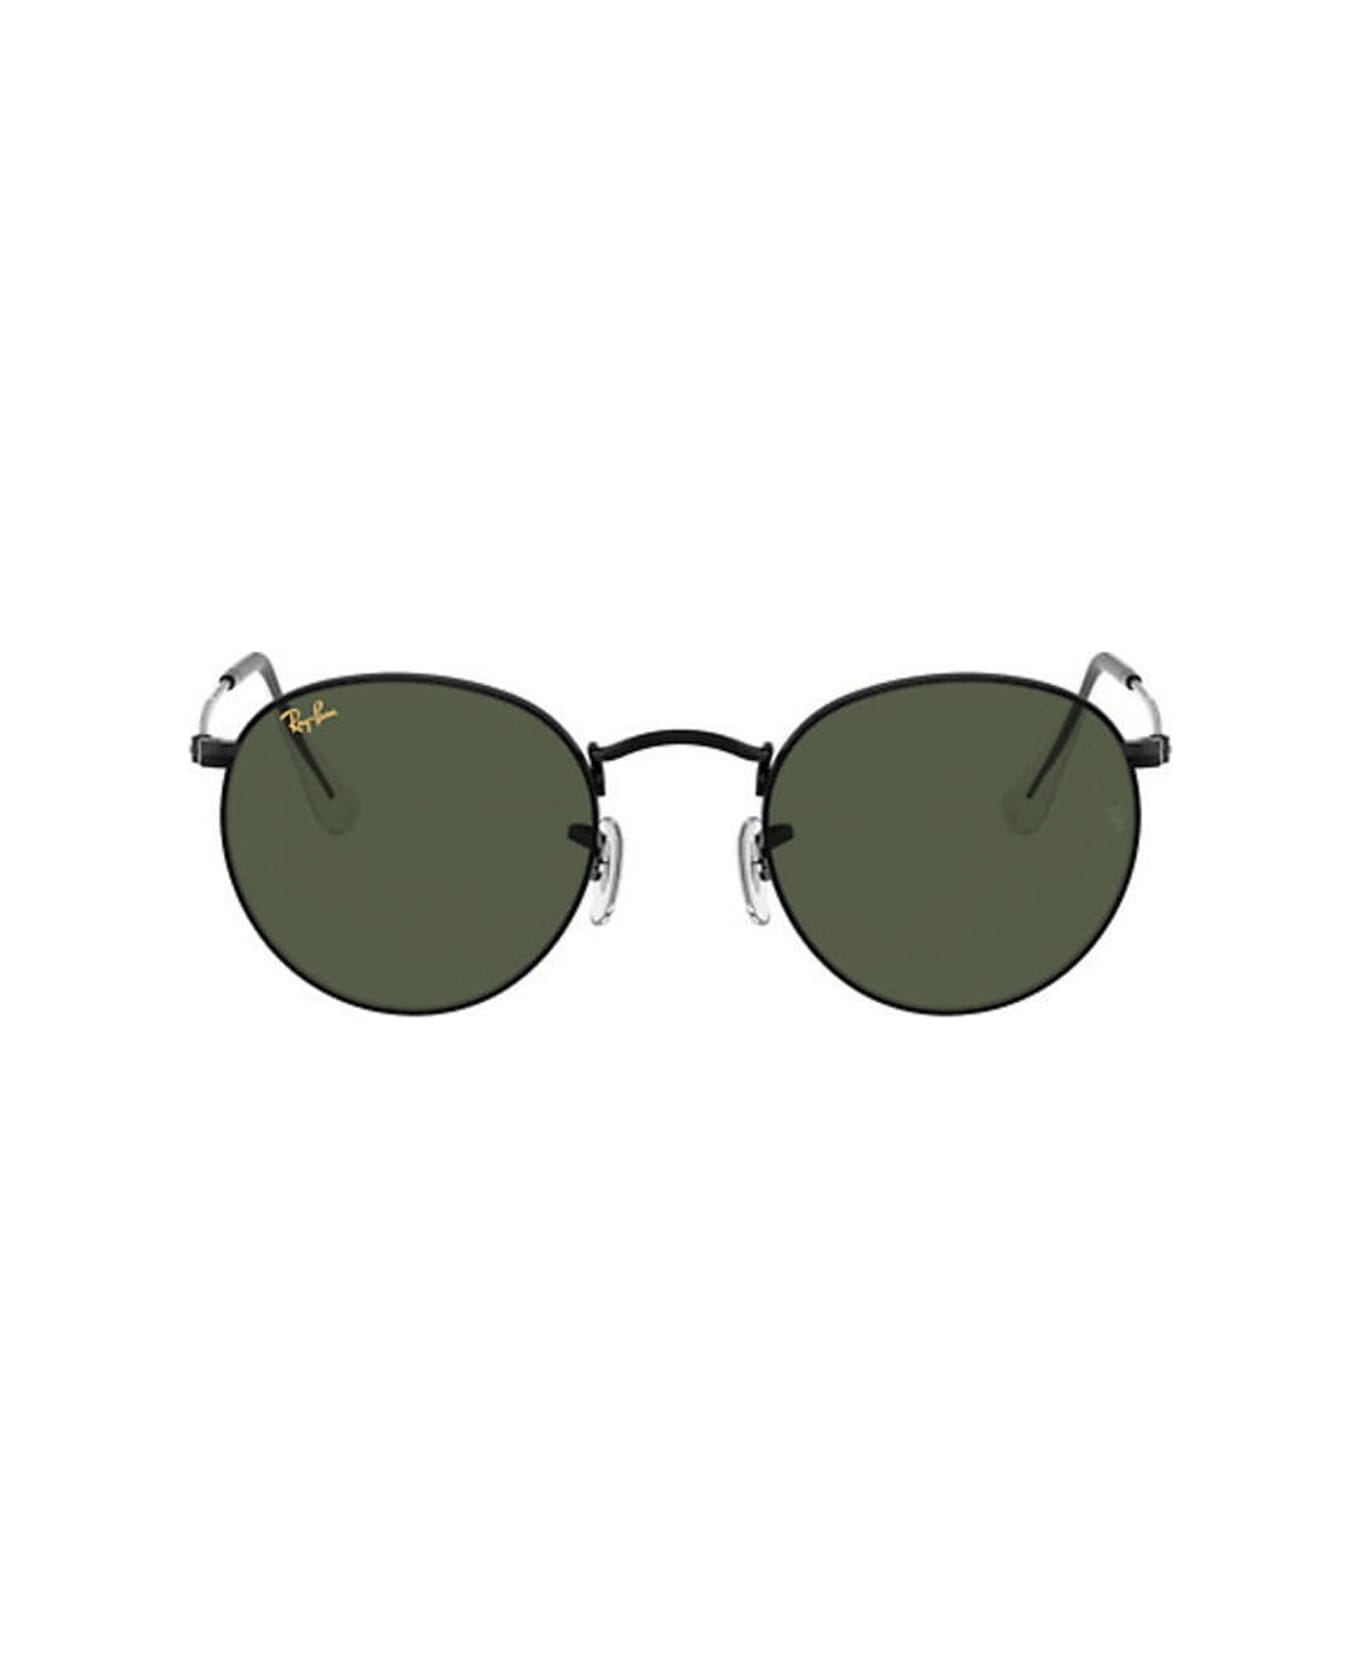 Ray-Ban Rb3447 - Round Metal Sunglasses - Nero サングラス